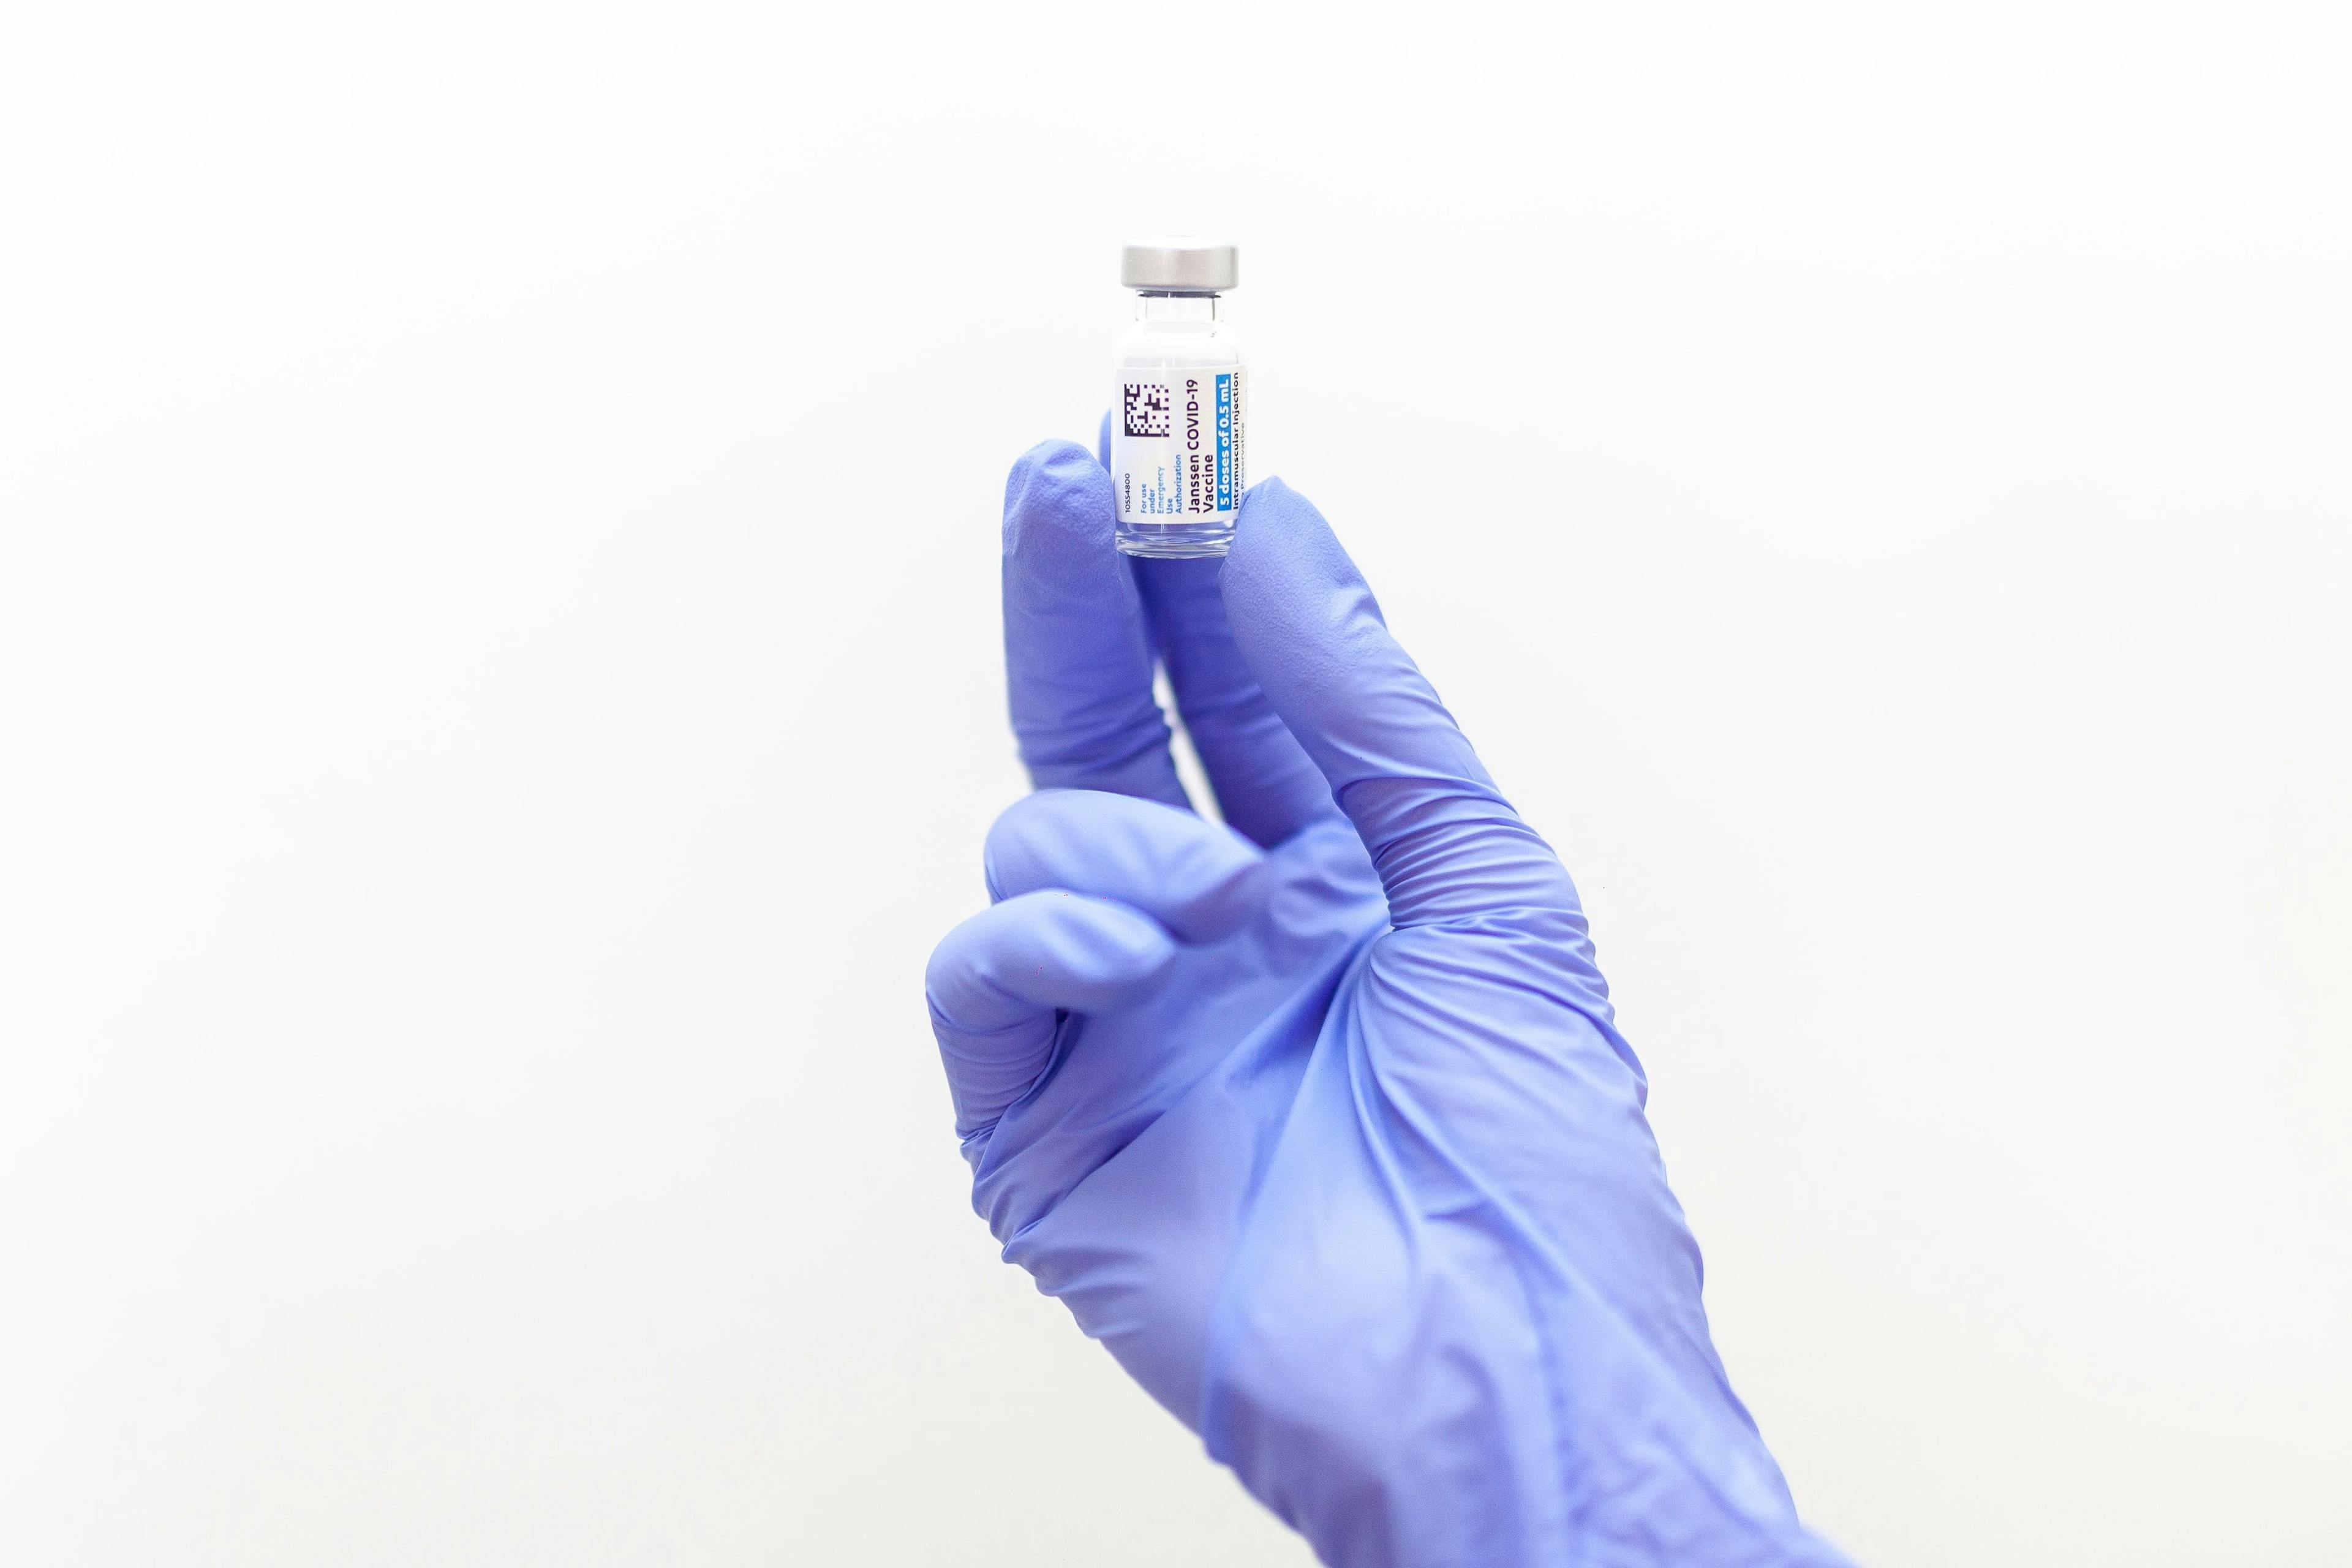 researcher holds Janssen COVID-19 vaccine